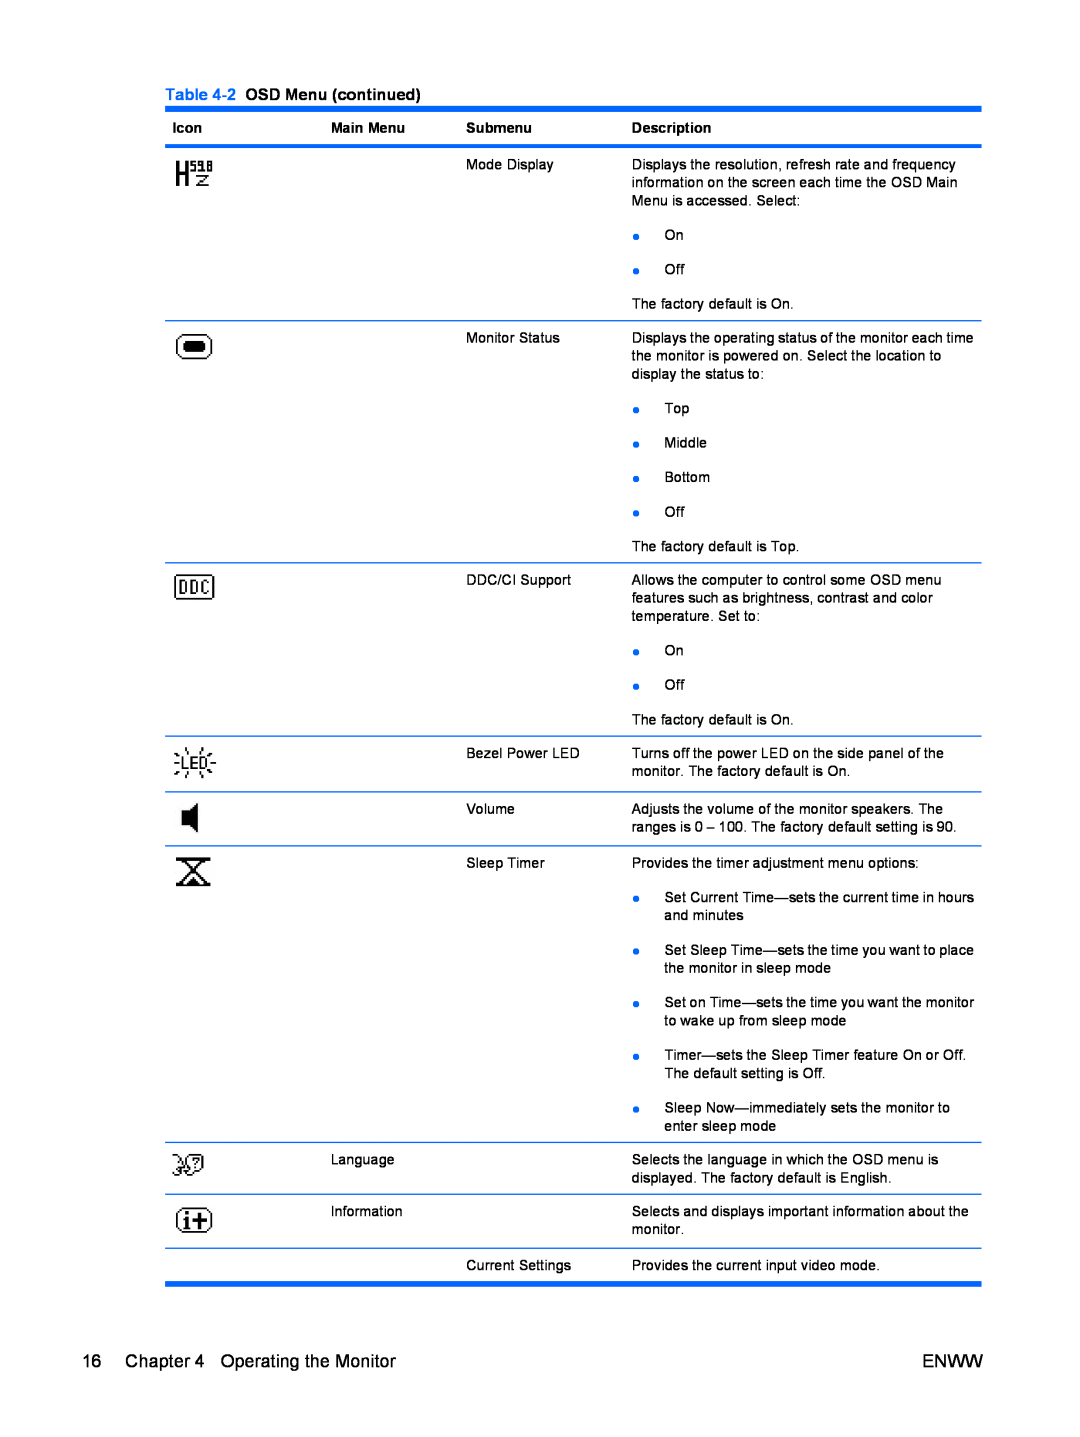 HP CQ1859E manual 2 OSD Menu continued, Icon, Main Menu, Submenu, Description 